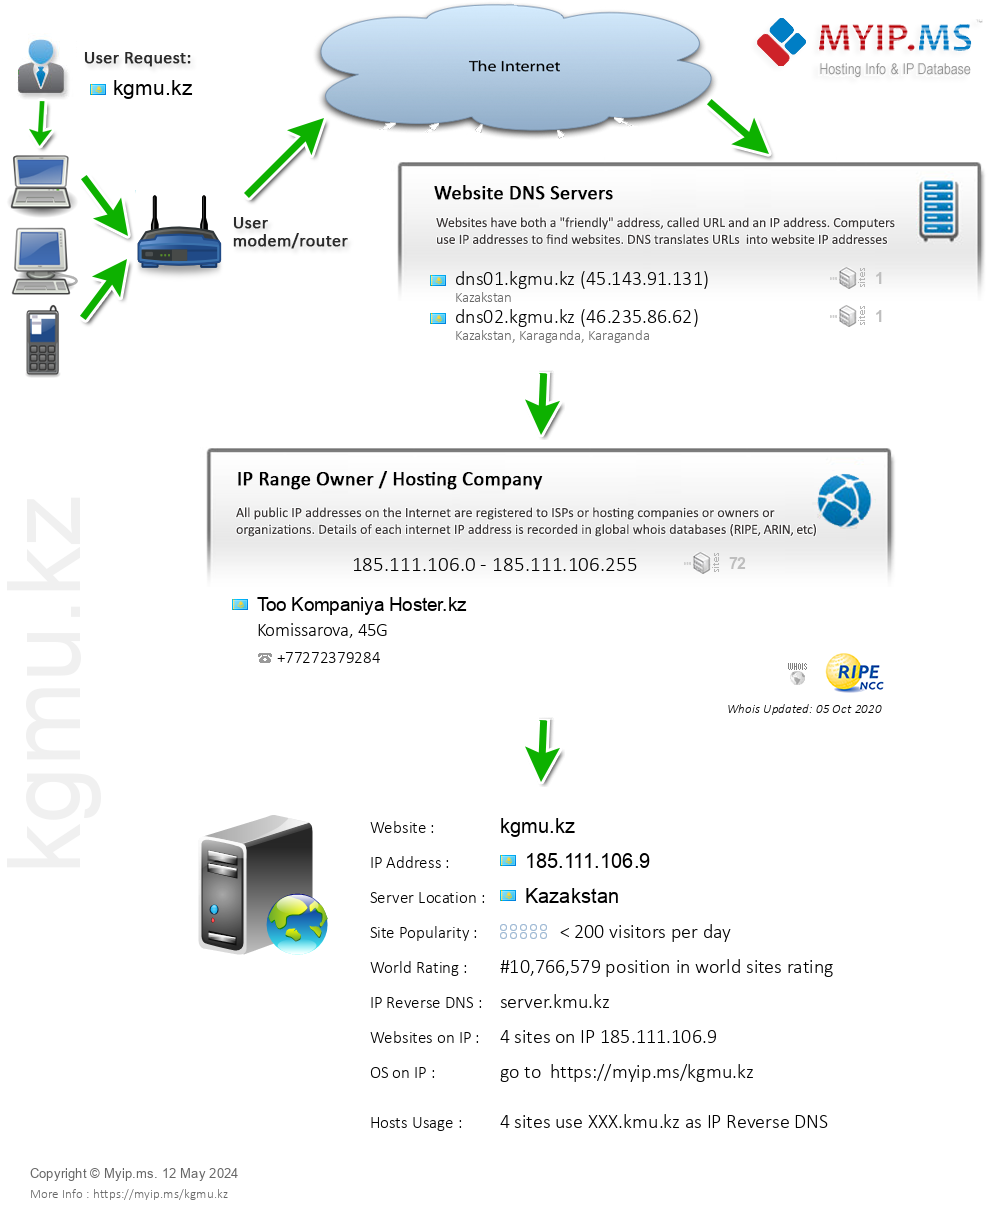 Kgmu.kz - Website Hosting Visual IP Diagram